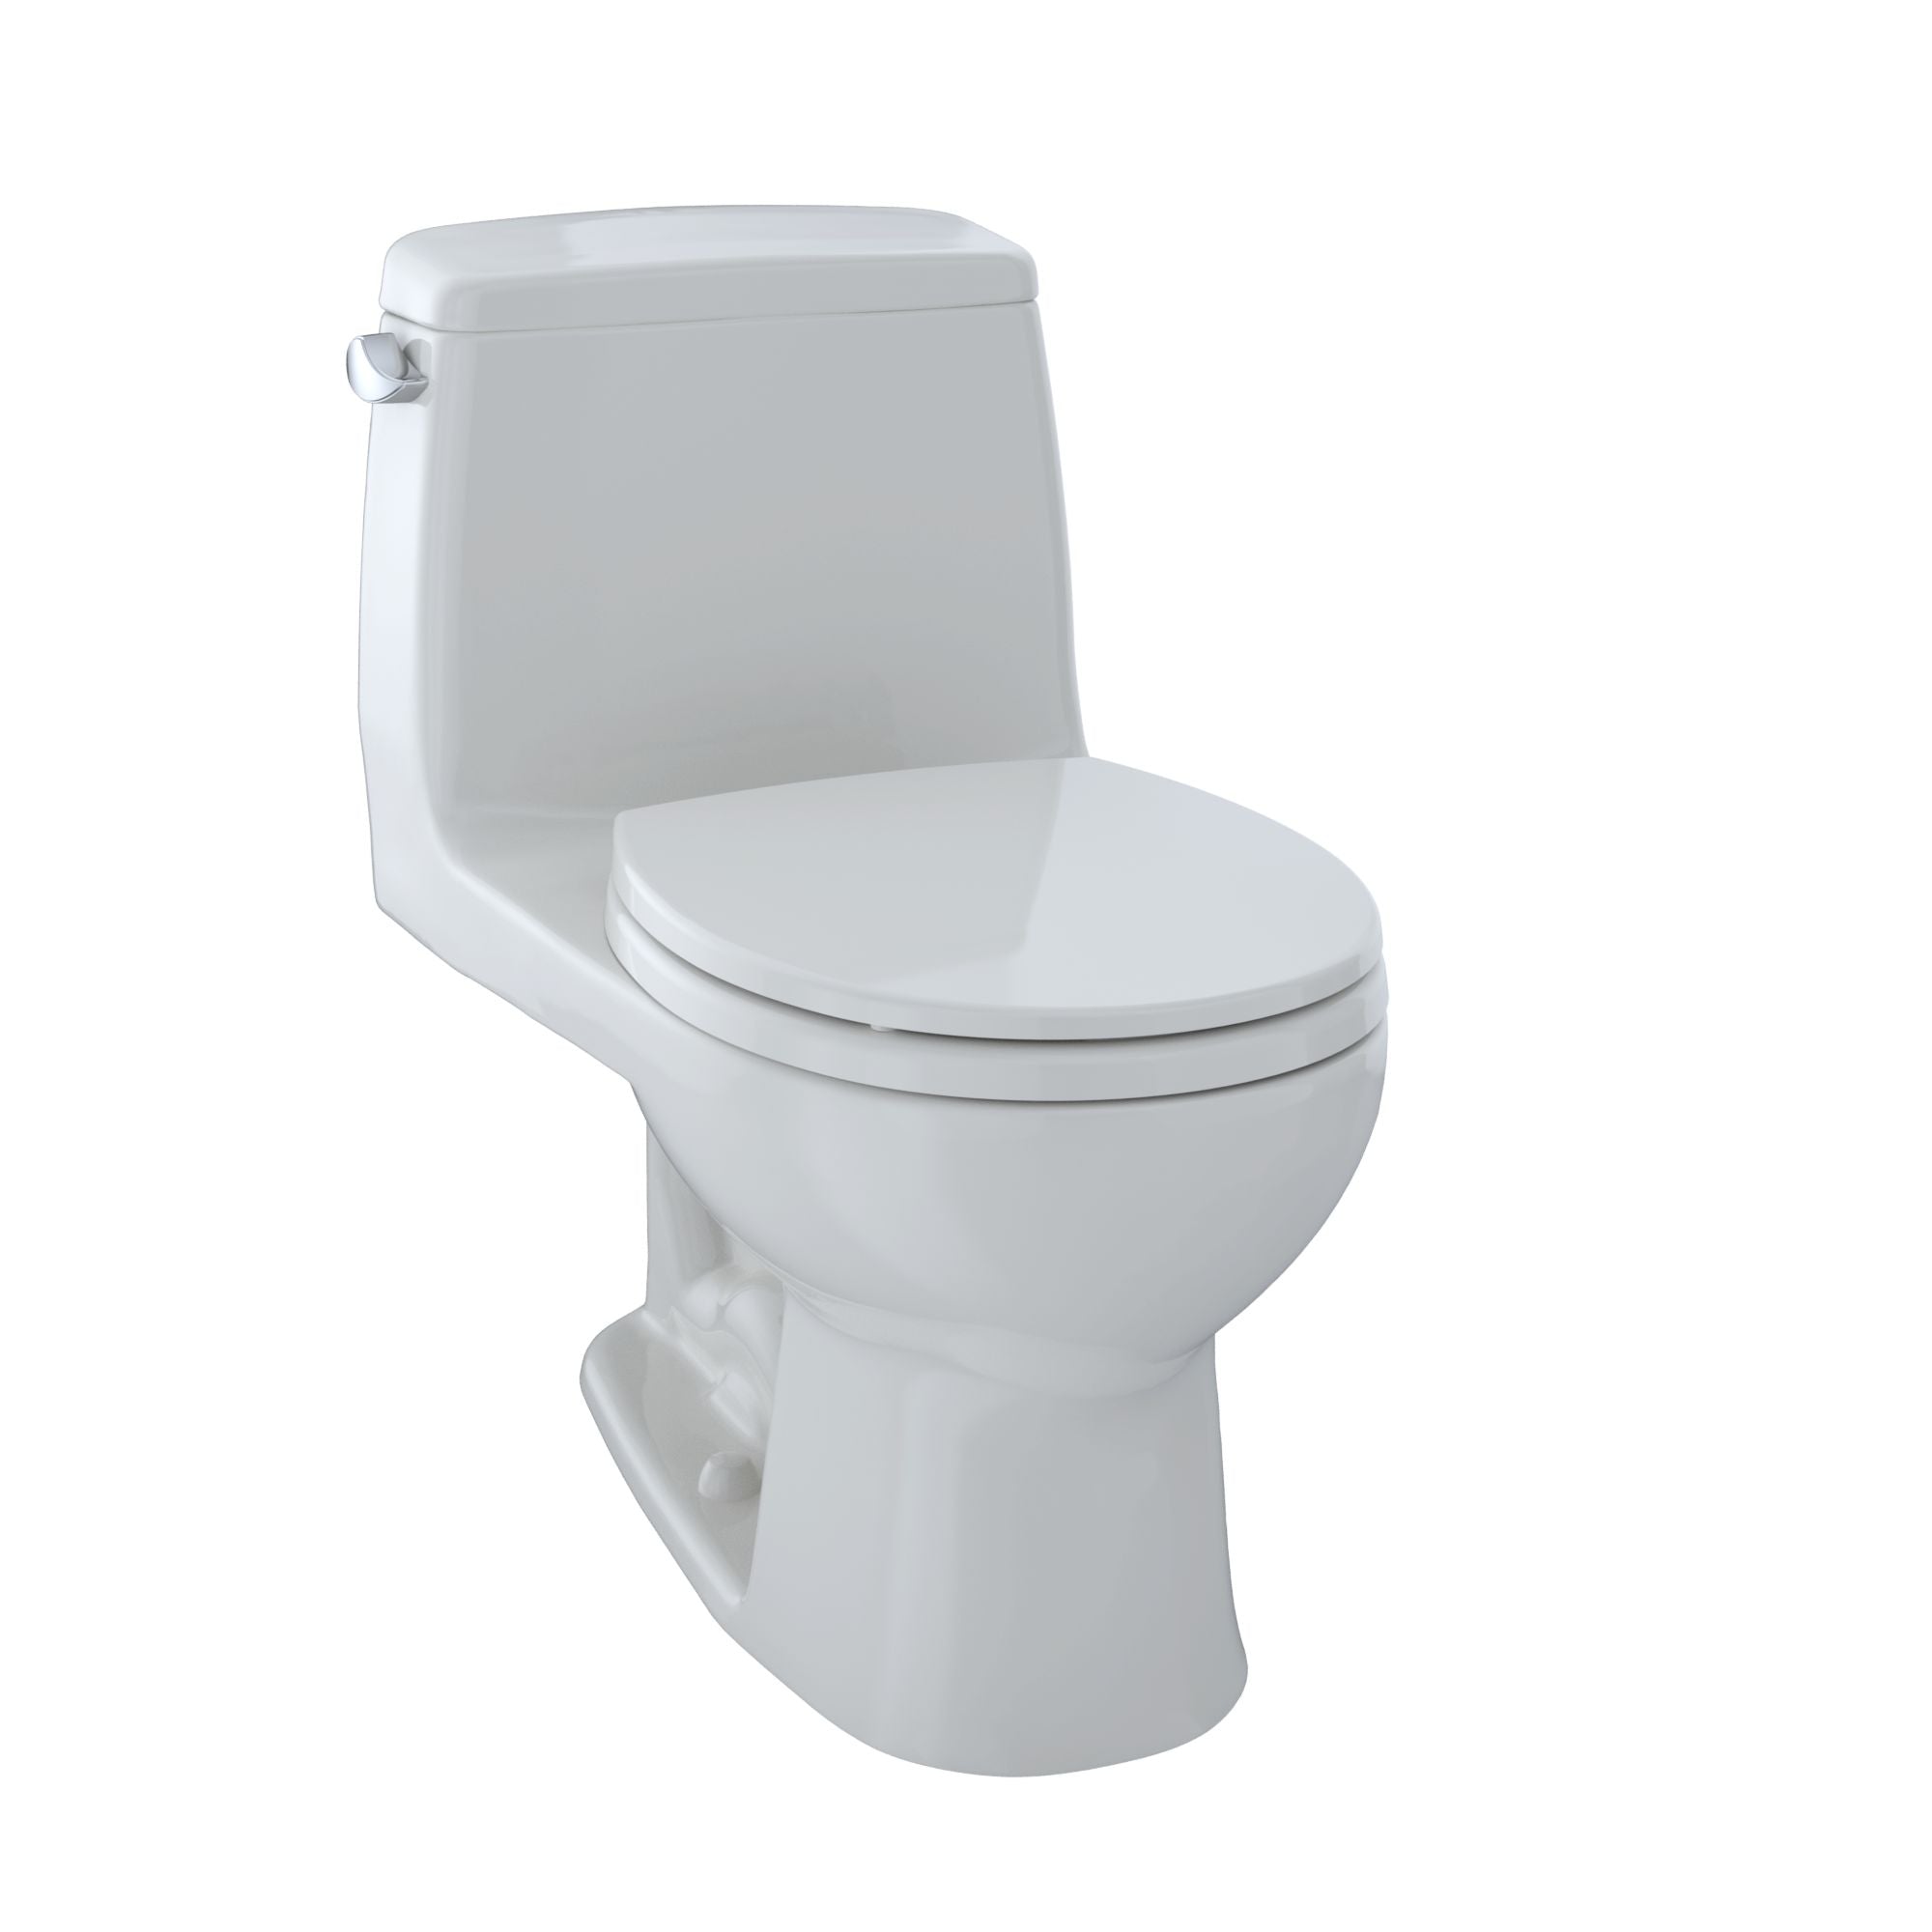 Toto Eco Ultramax One-piece Toilet 1.28 GPF Round Bowl